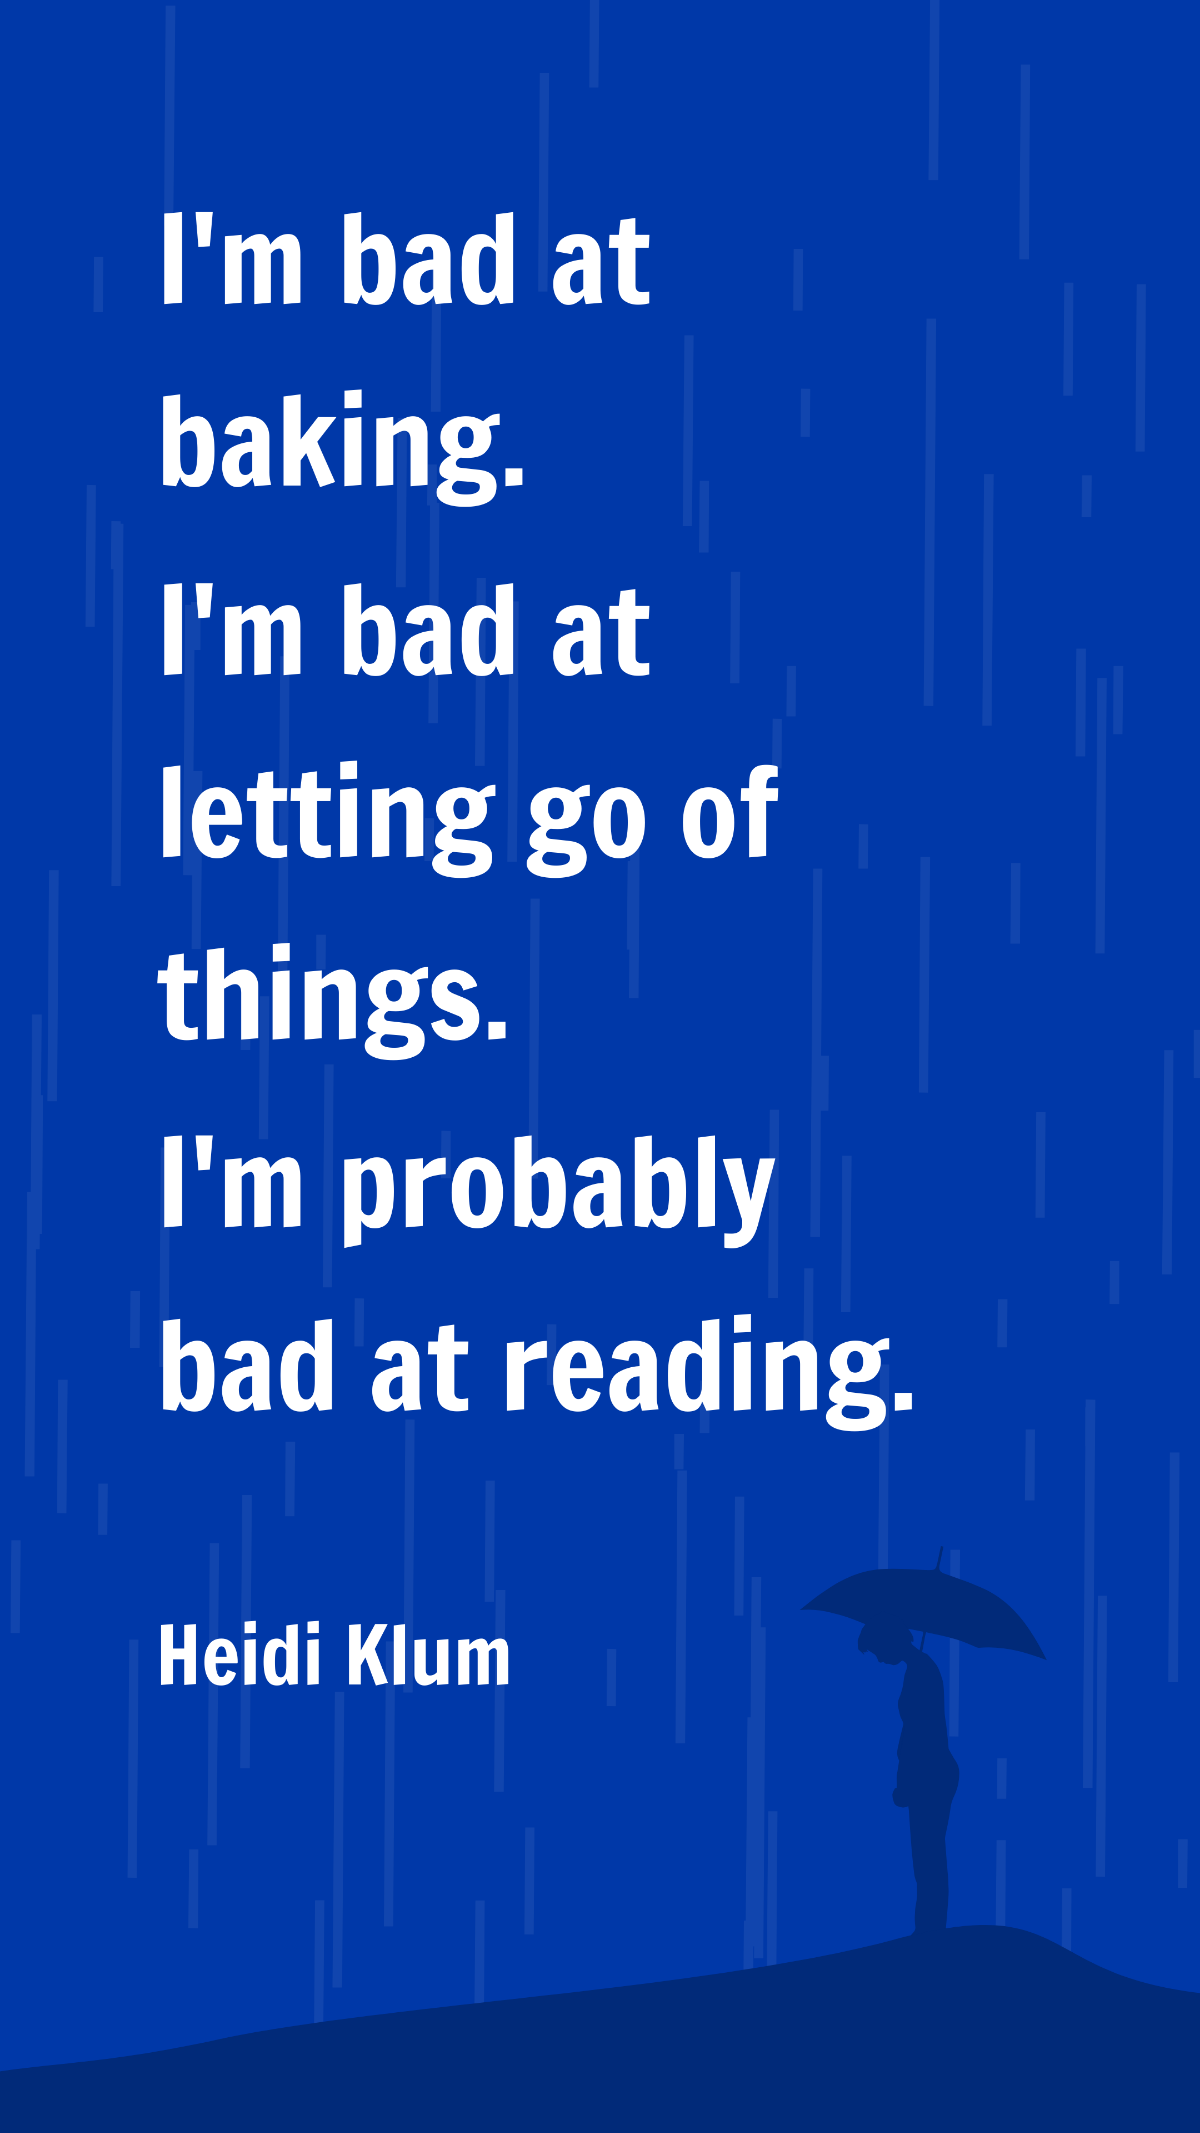 Free Heidi Klum - I'm bad at baking. I'm bad at letting go of things. I'm probably bad at reading. Template